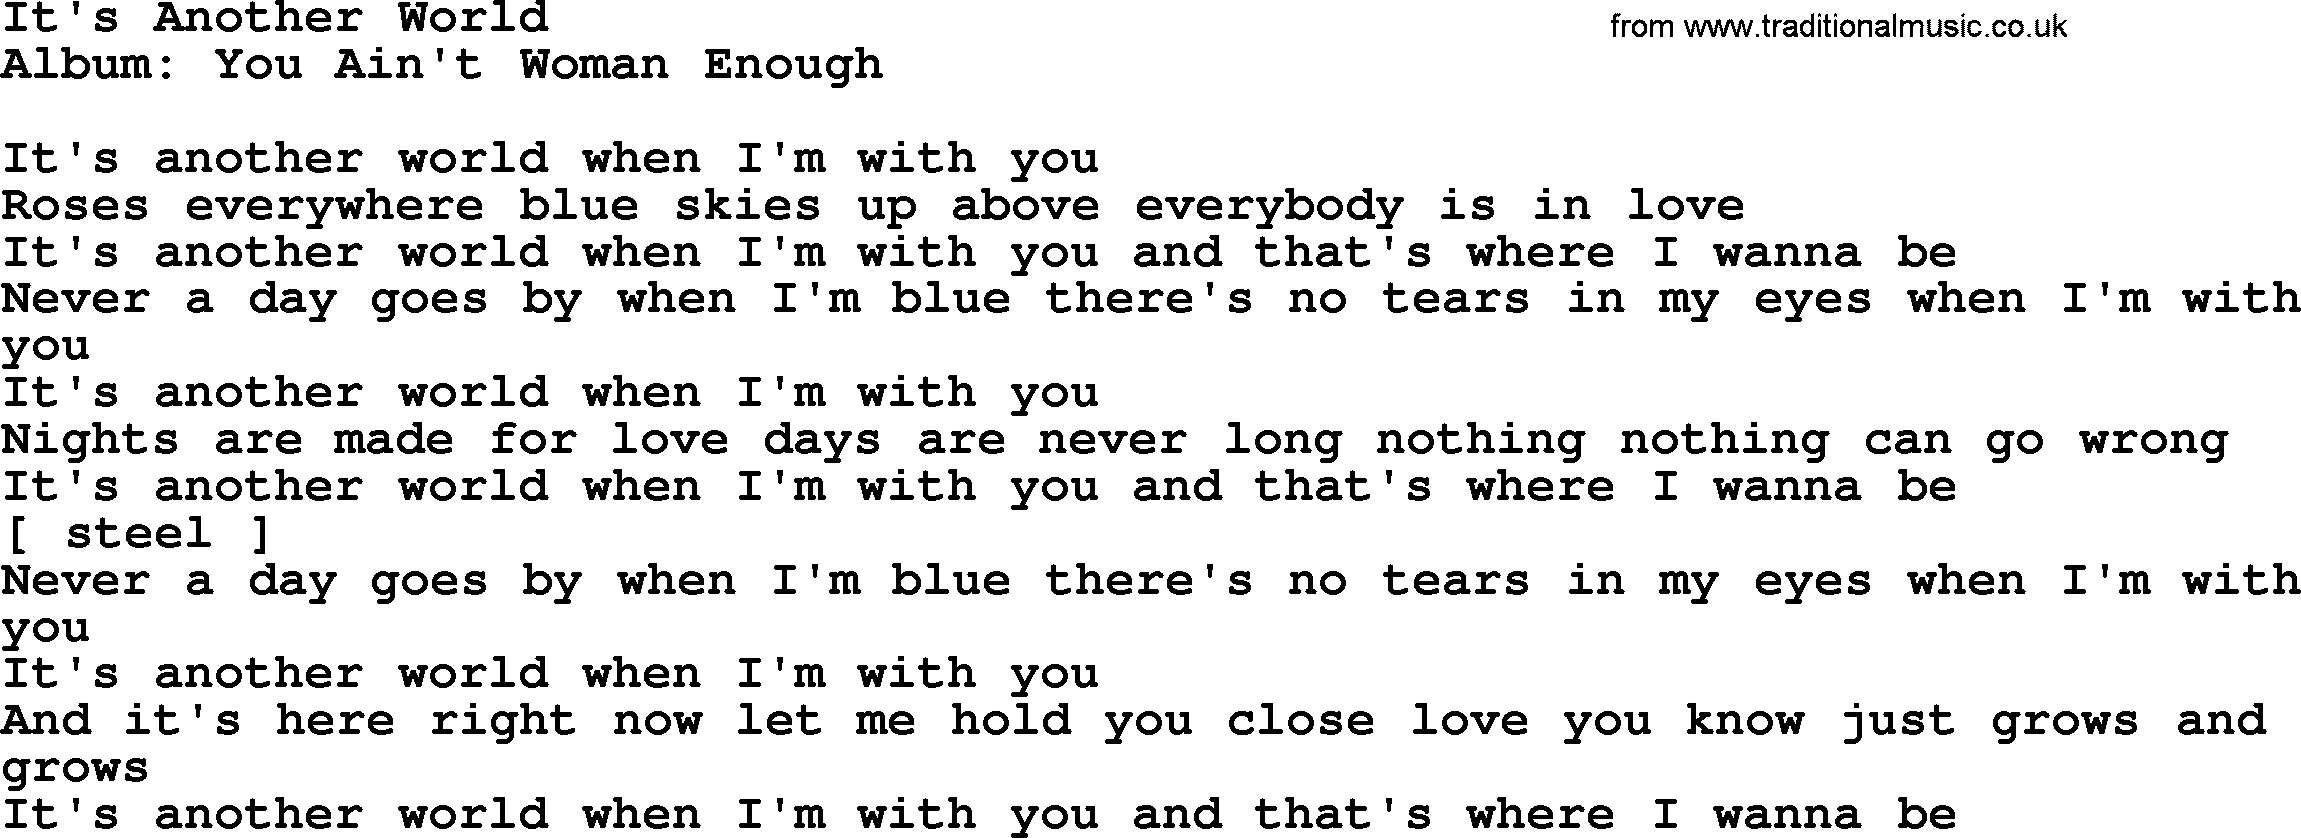 Loretta Lynn song: It's Another World lyrics